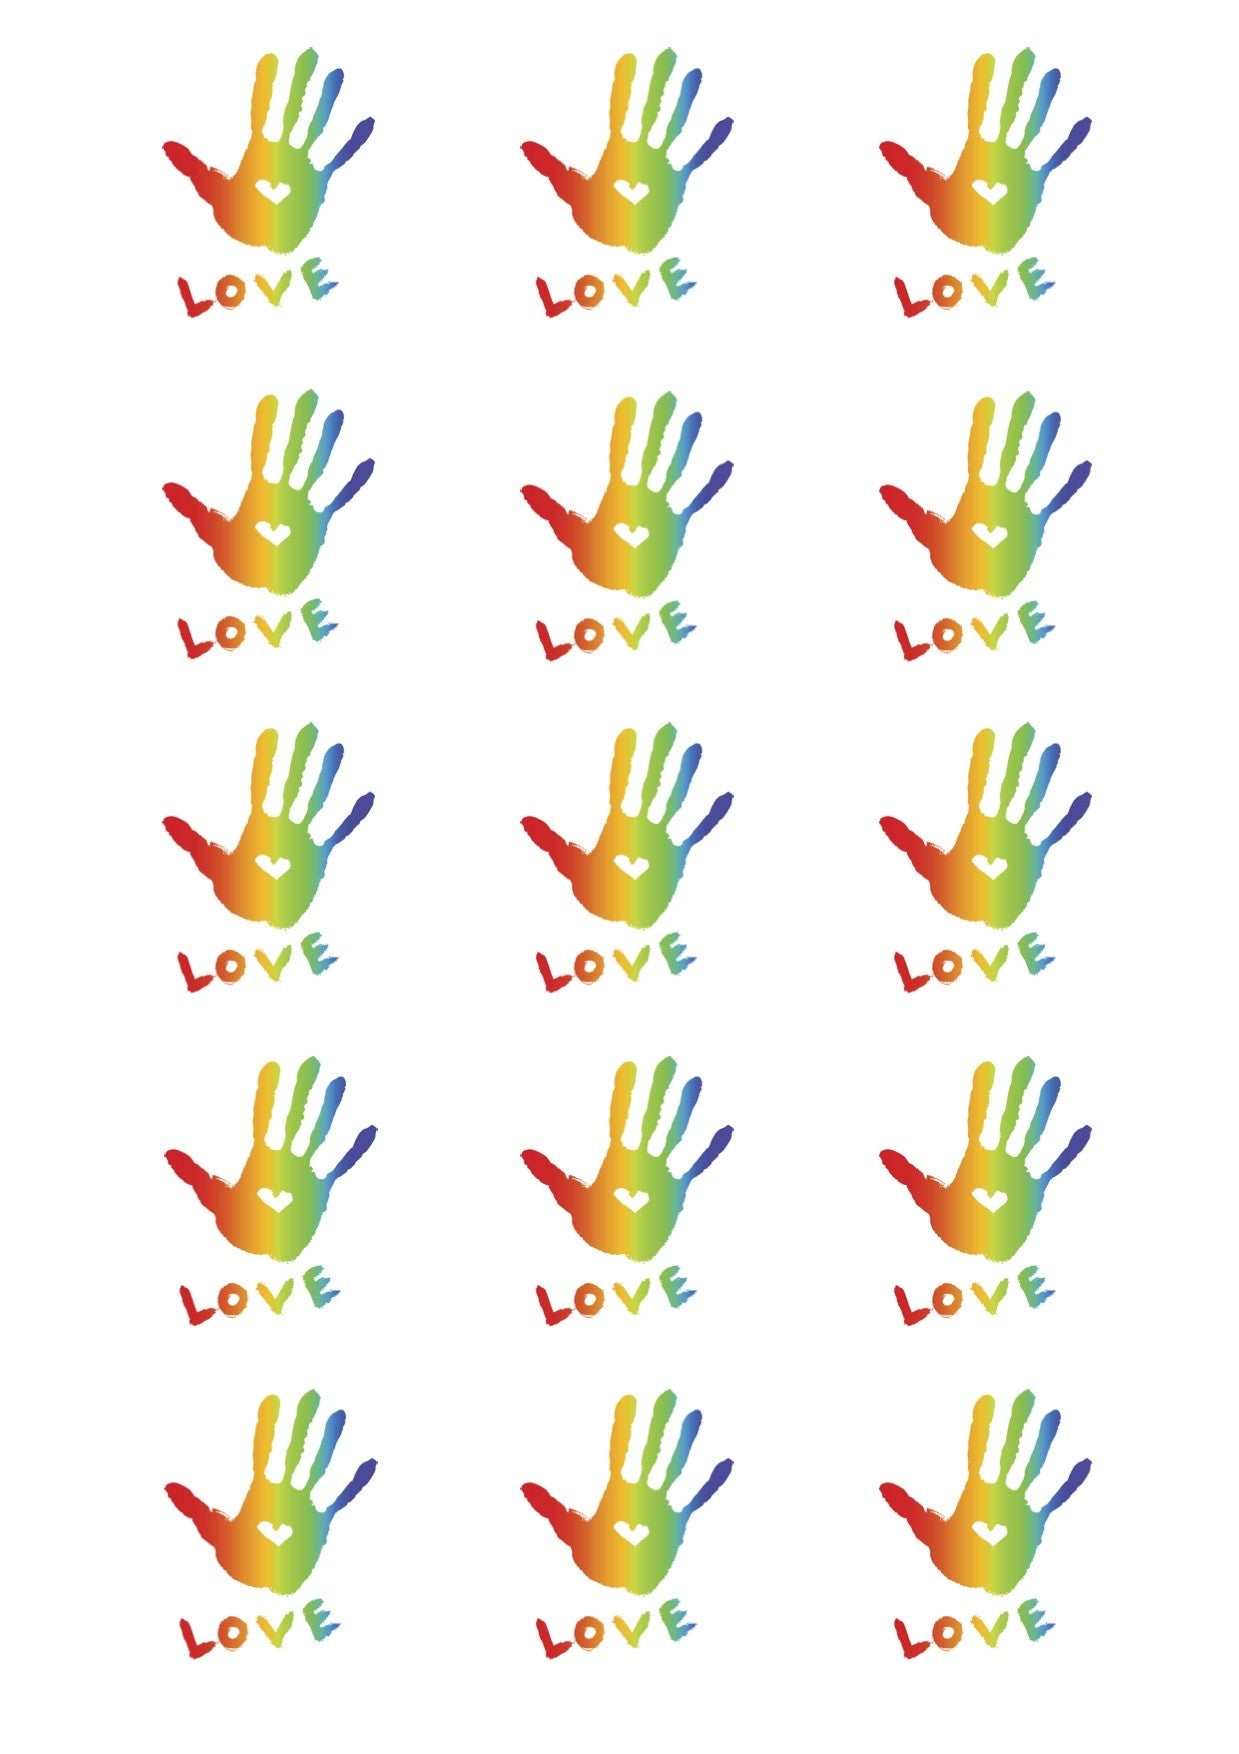 Design Sheet edible image LOVE Rainbow Hands